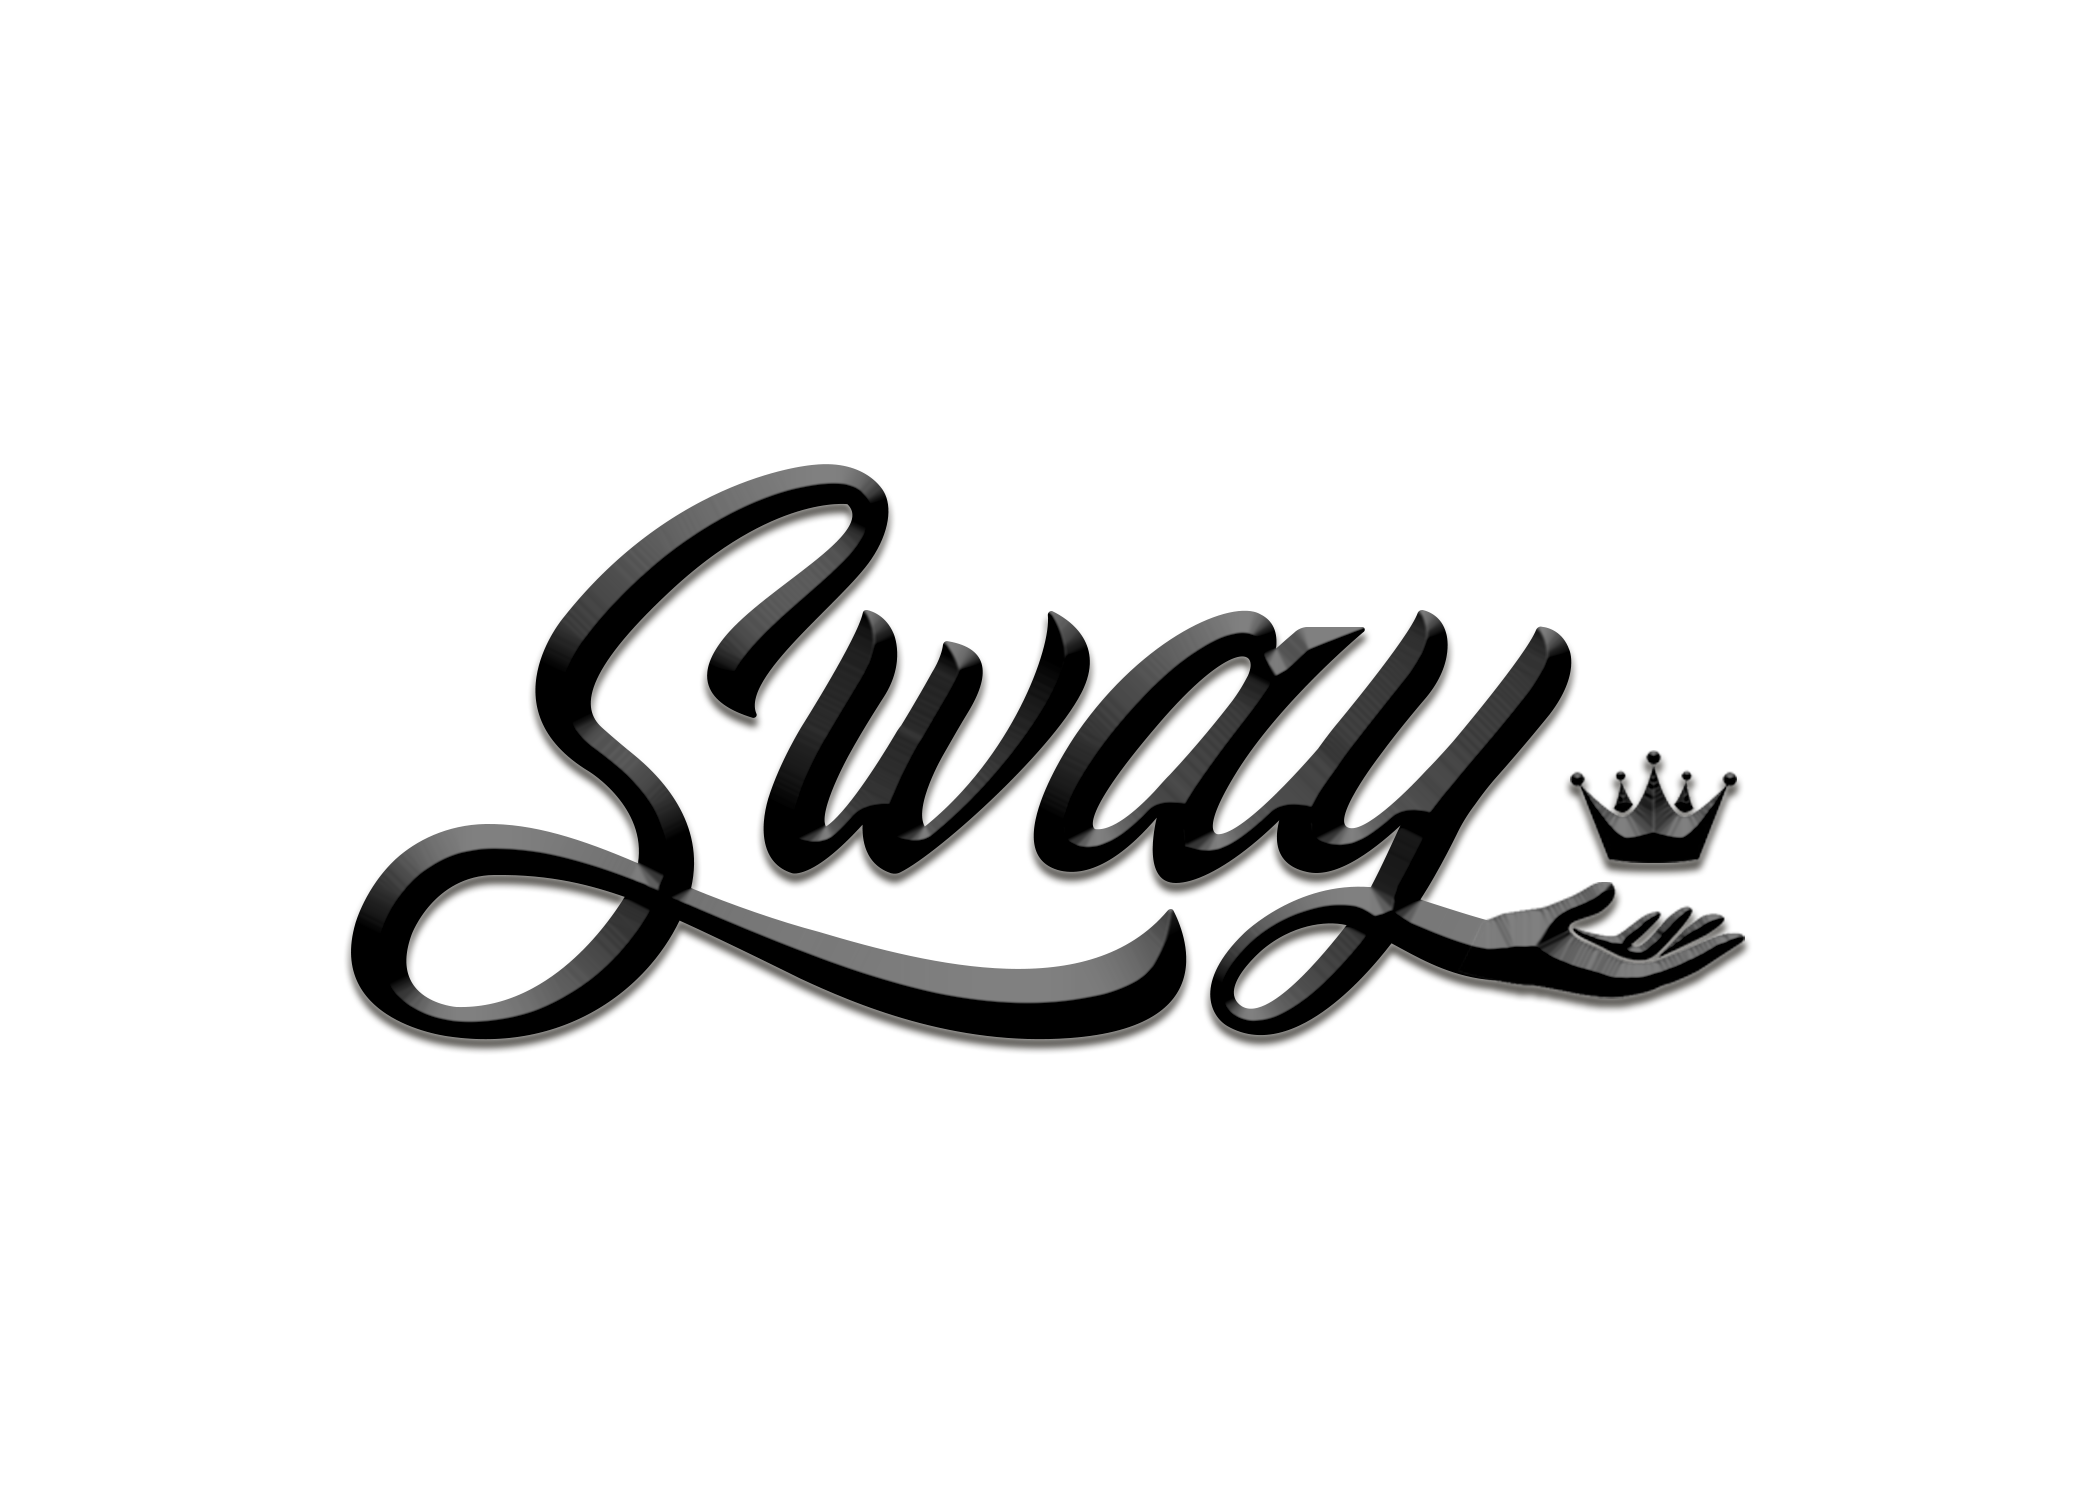 Sway Supremacy